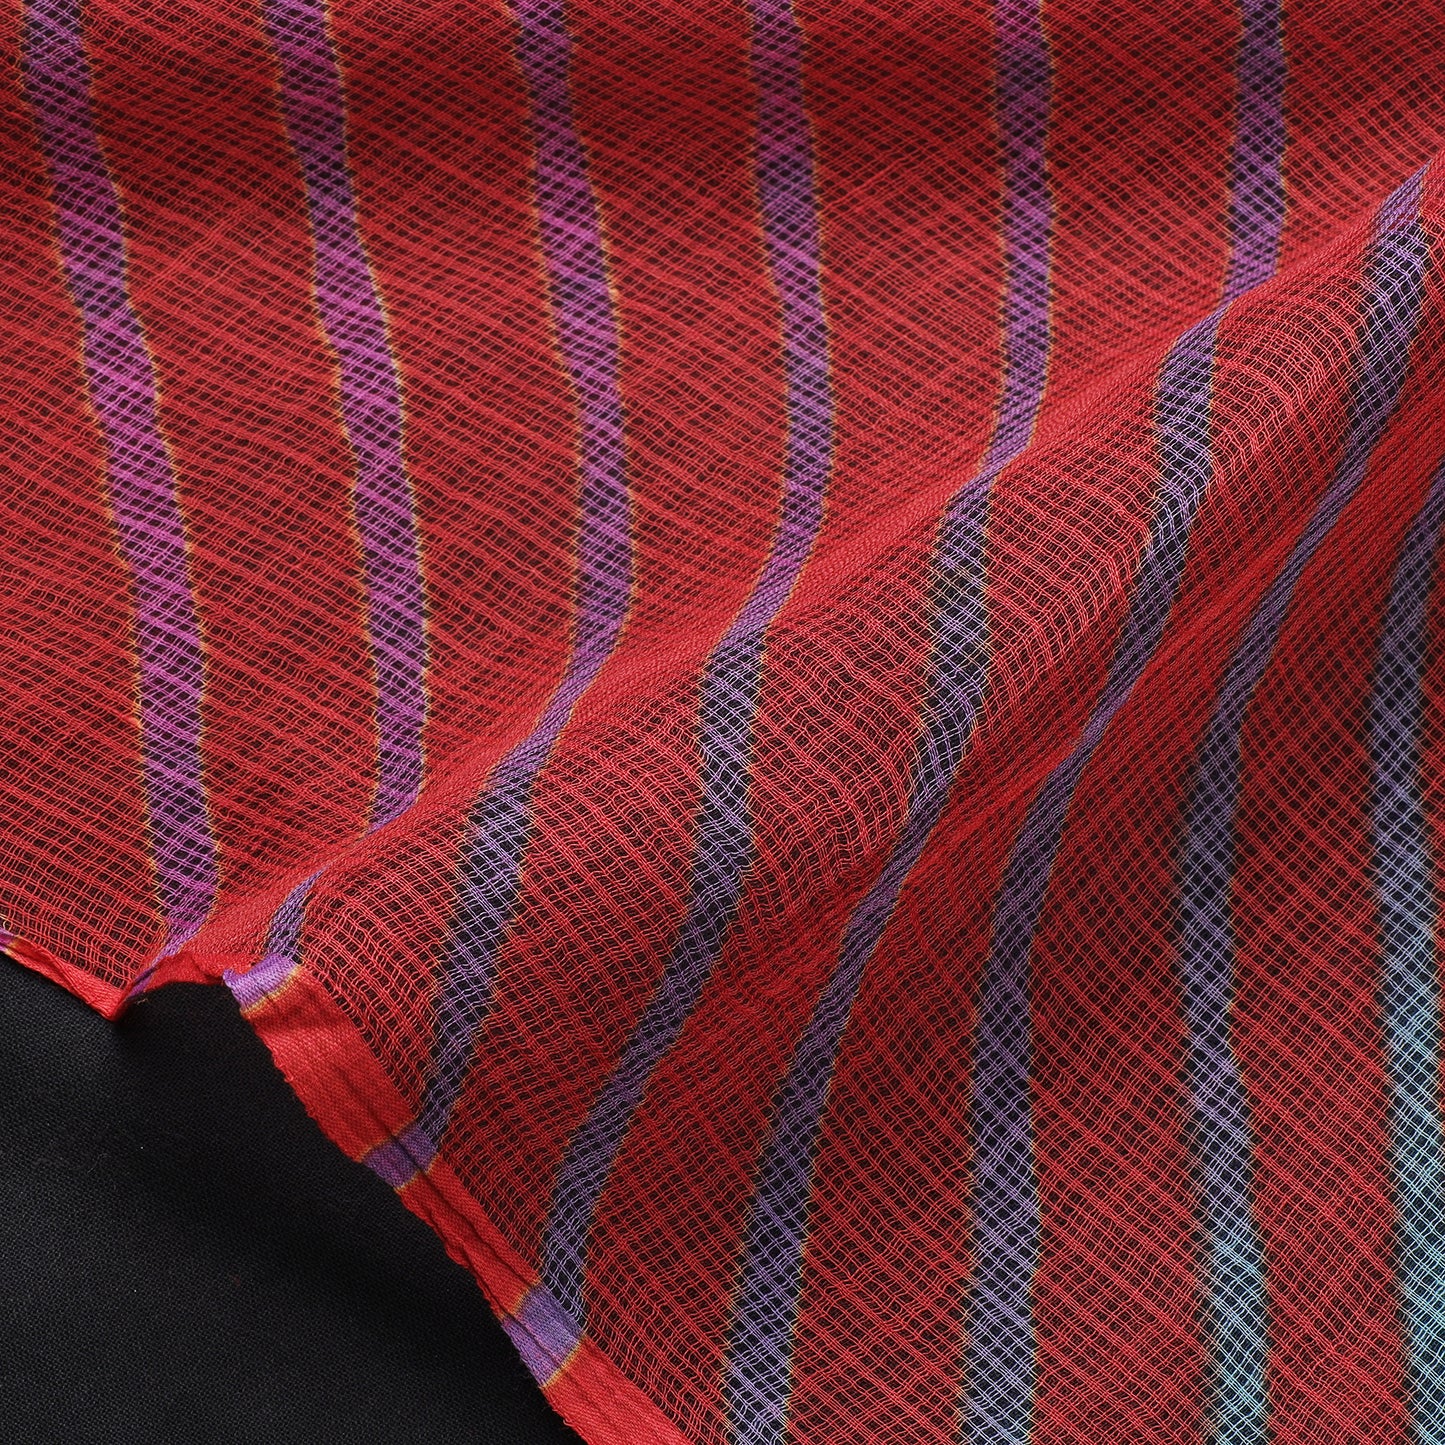 Red - Leheriya Tie-Dye Kota Doria Cotton Fabric 60